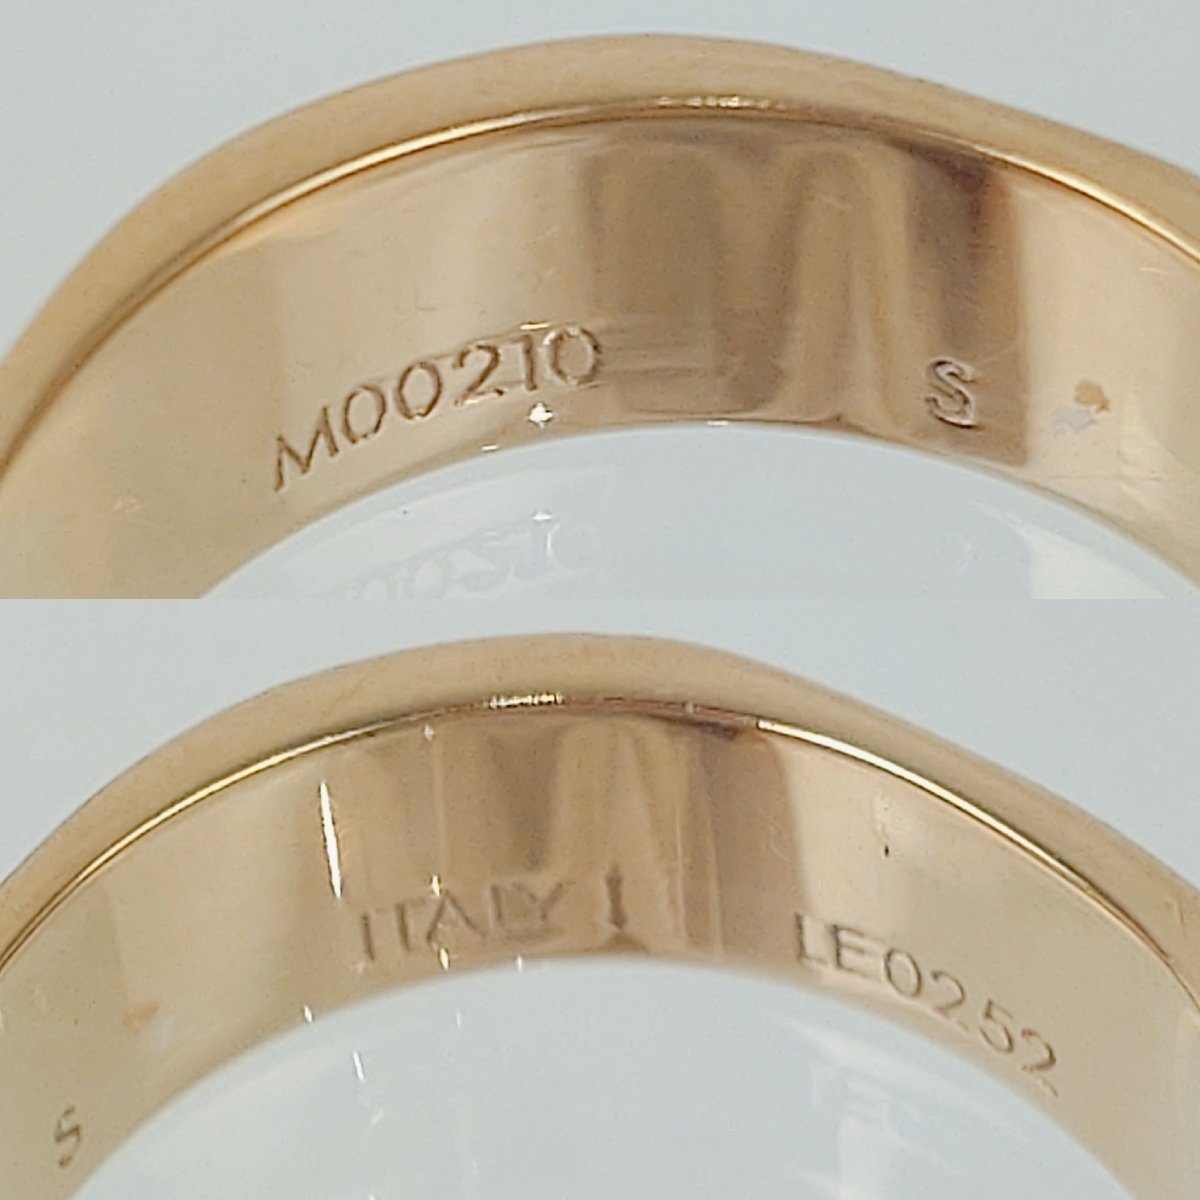 LOUIS VUITTON ring * nano gram M00210 ring Gold color box * cloth sack attaching Louis Vuitton LV ring 